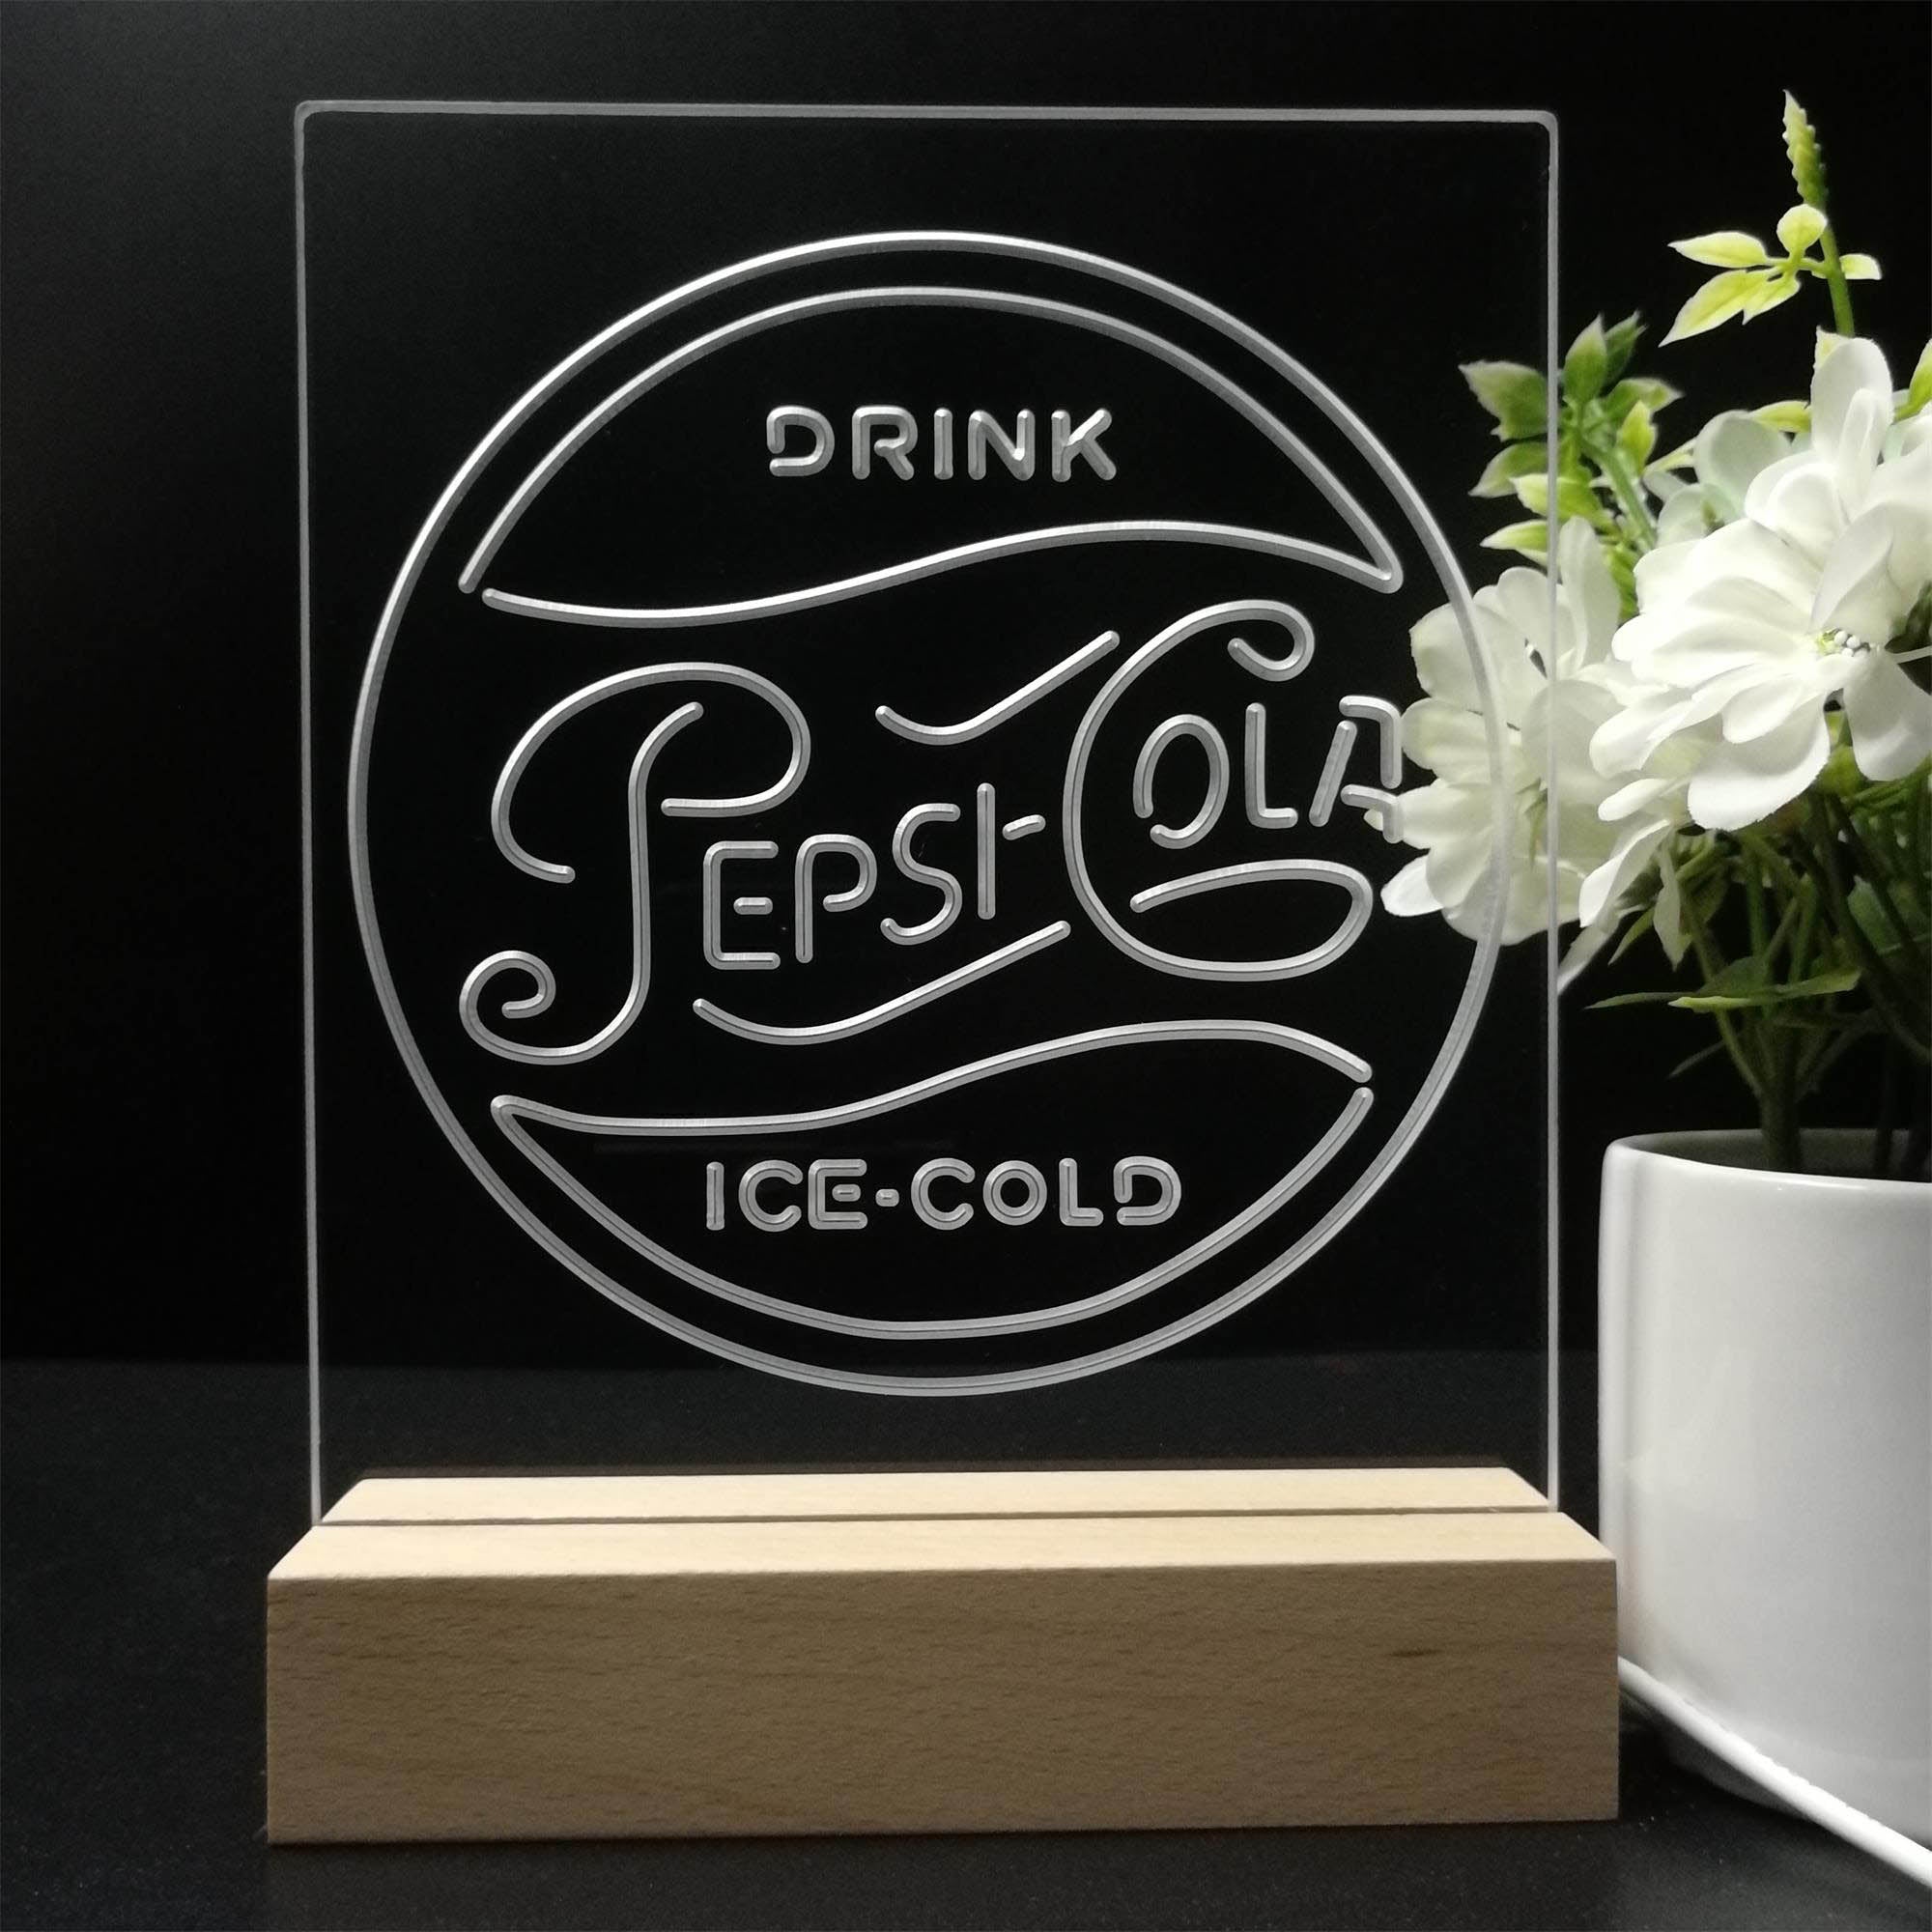 Drink Ice-Cold Pepsi Cola 3D Illusion Night Light Desk Lamp